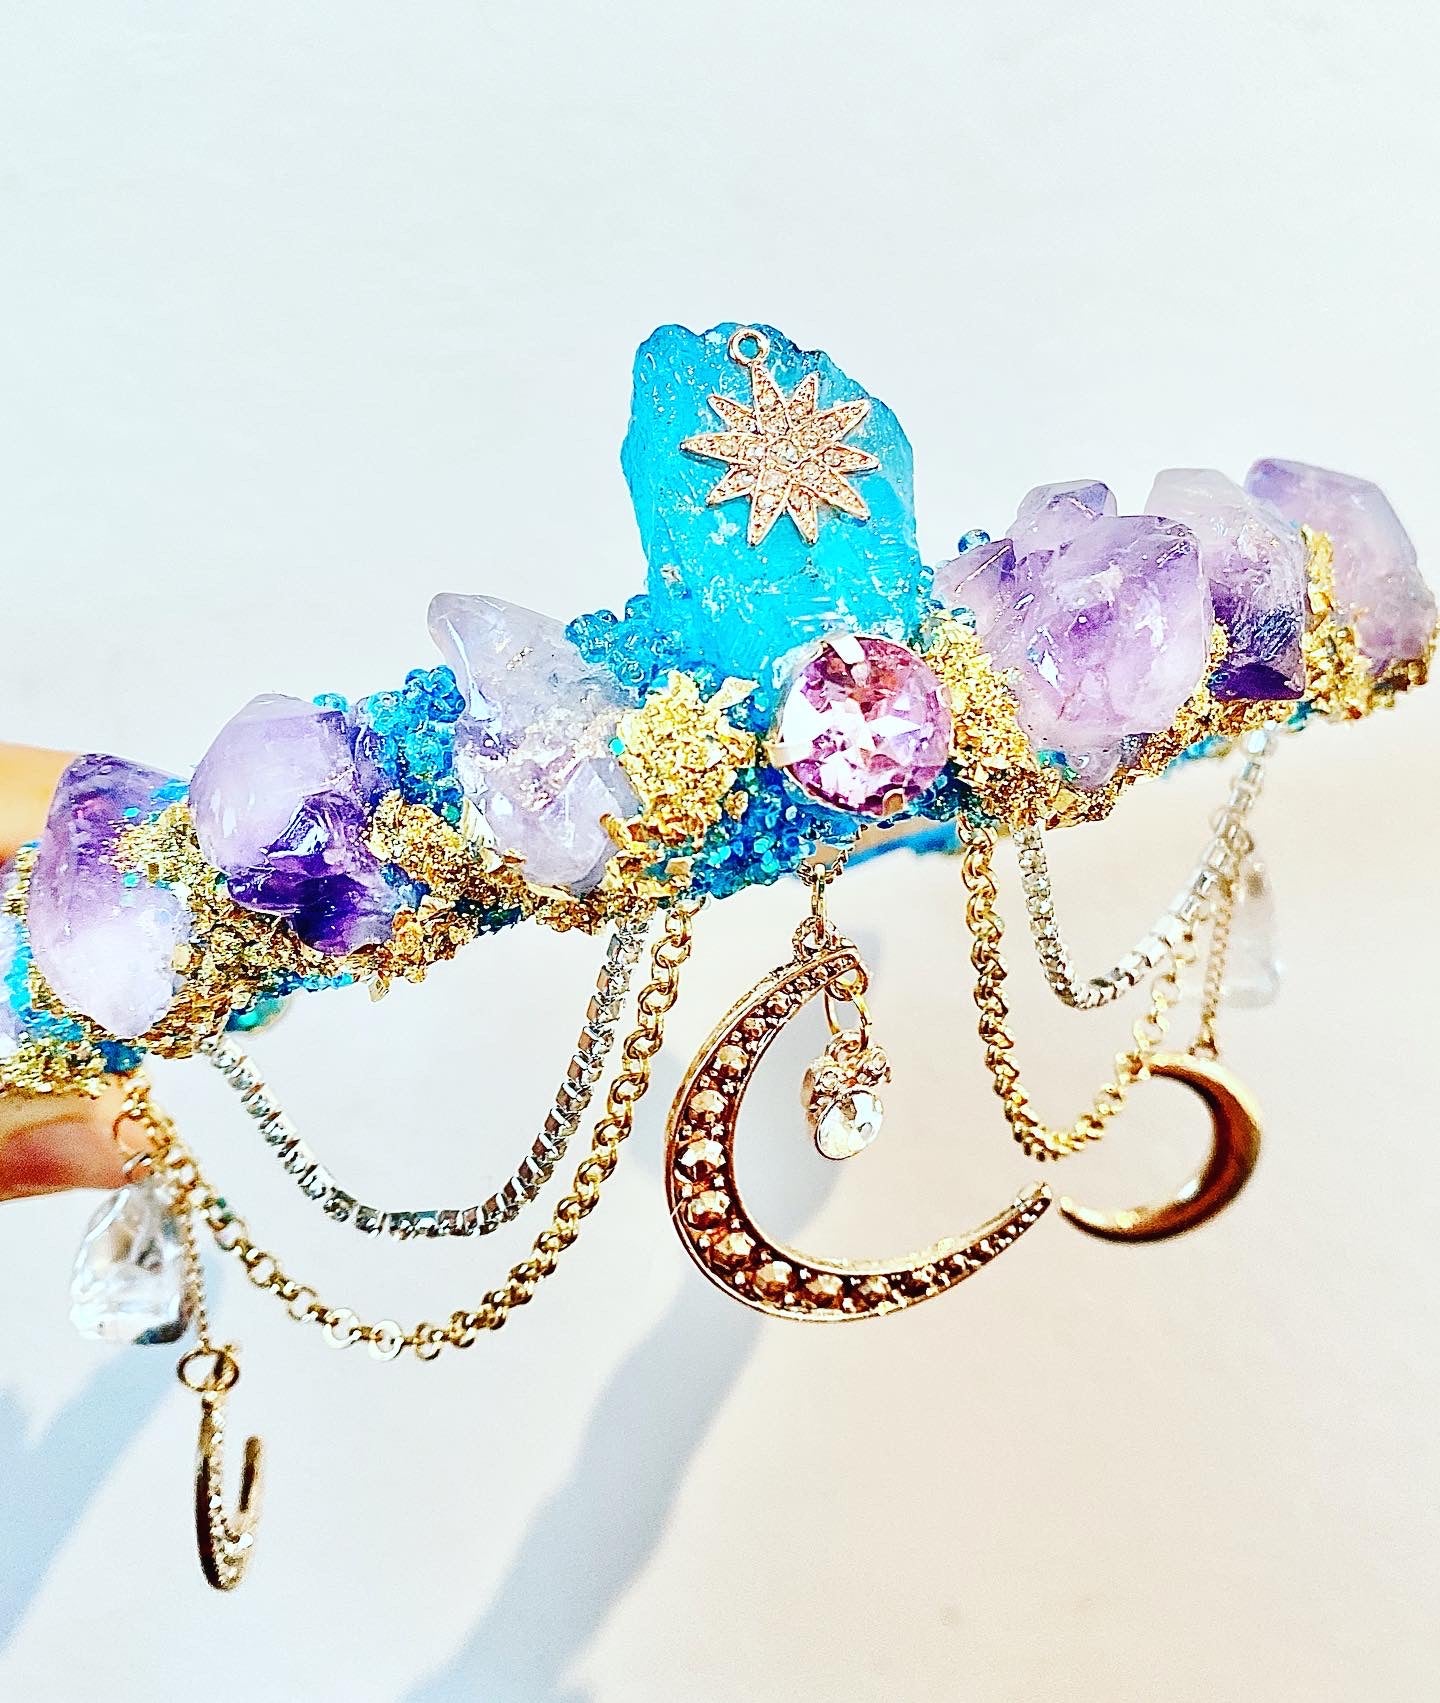 Amethyst & blue aura mermaid crown